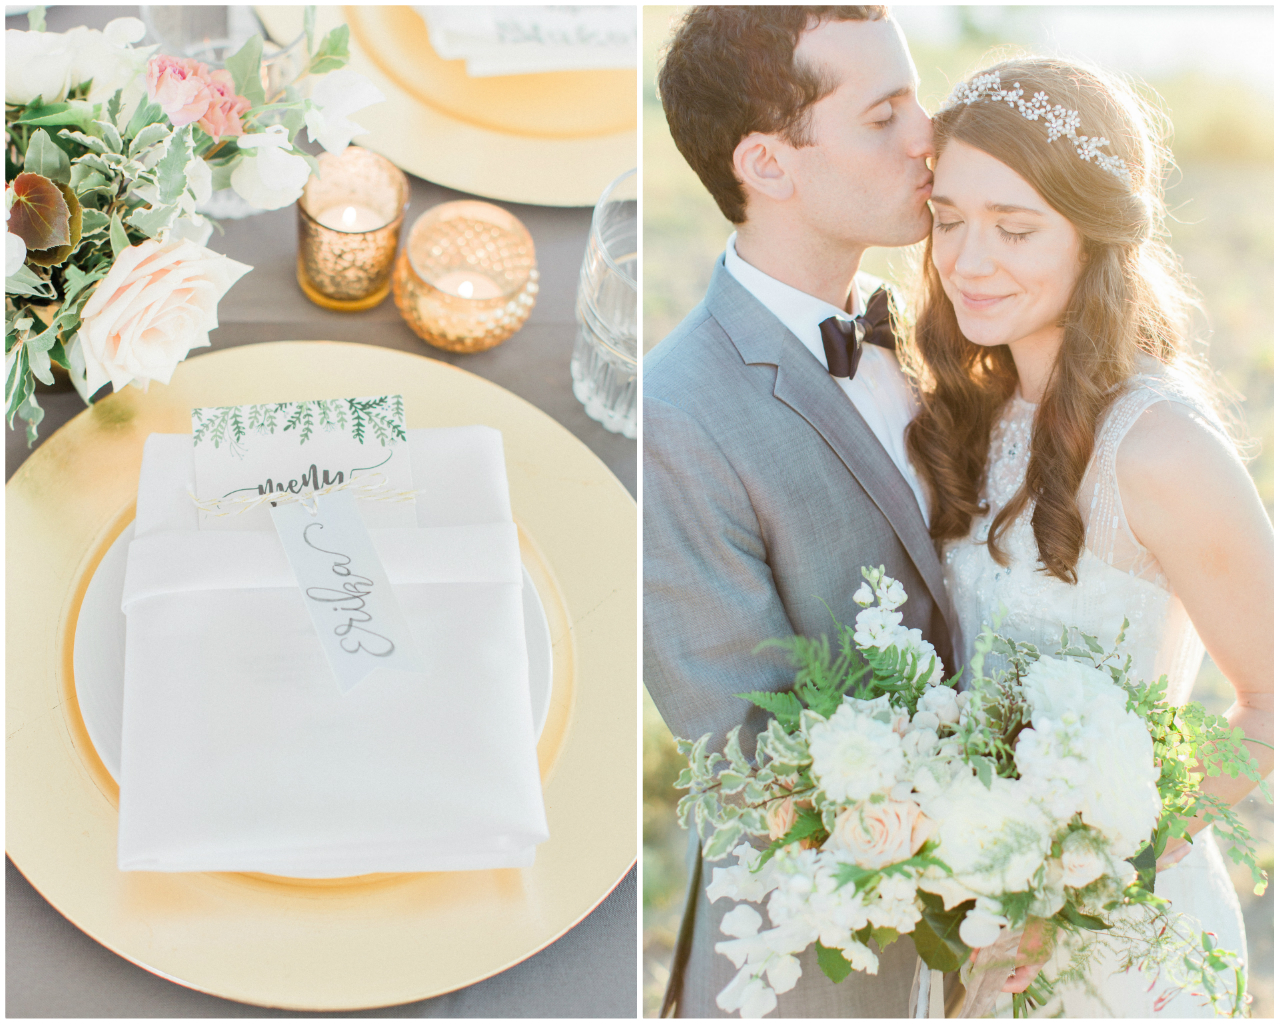 Jewish Wedding Ideas | The Day's Design | Samantah James Photography